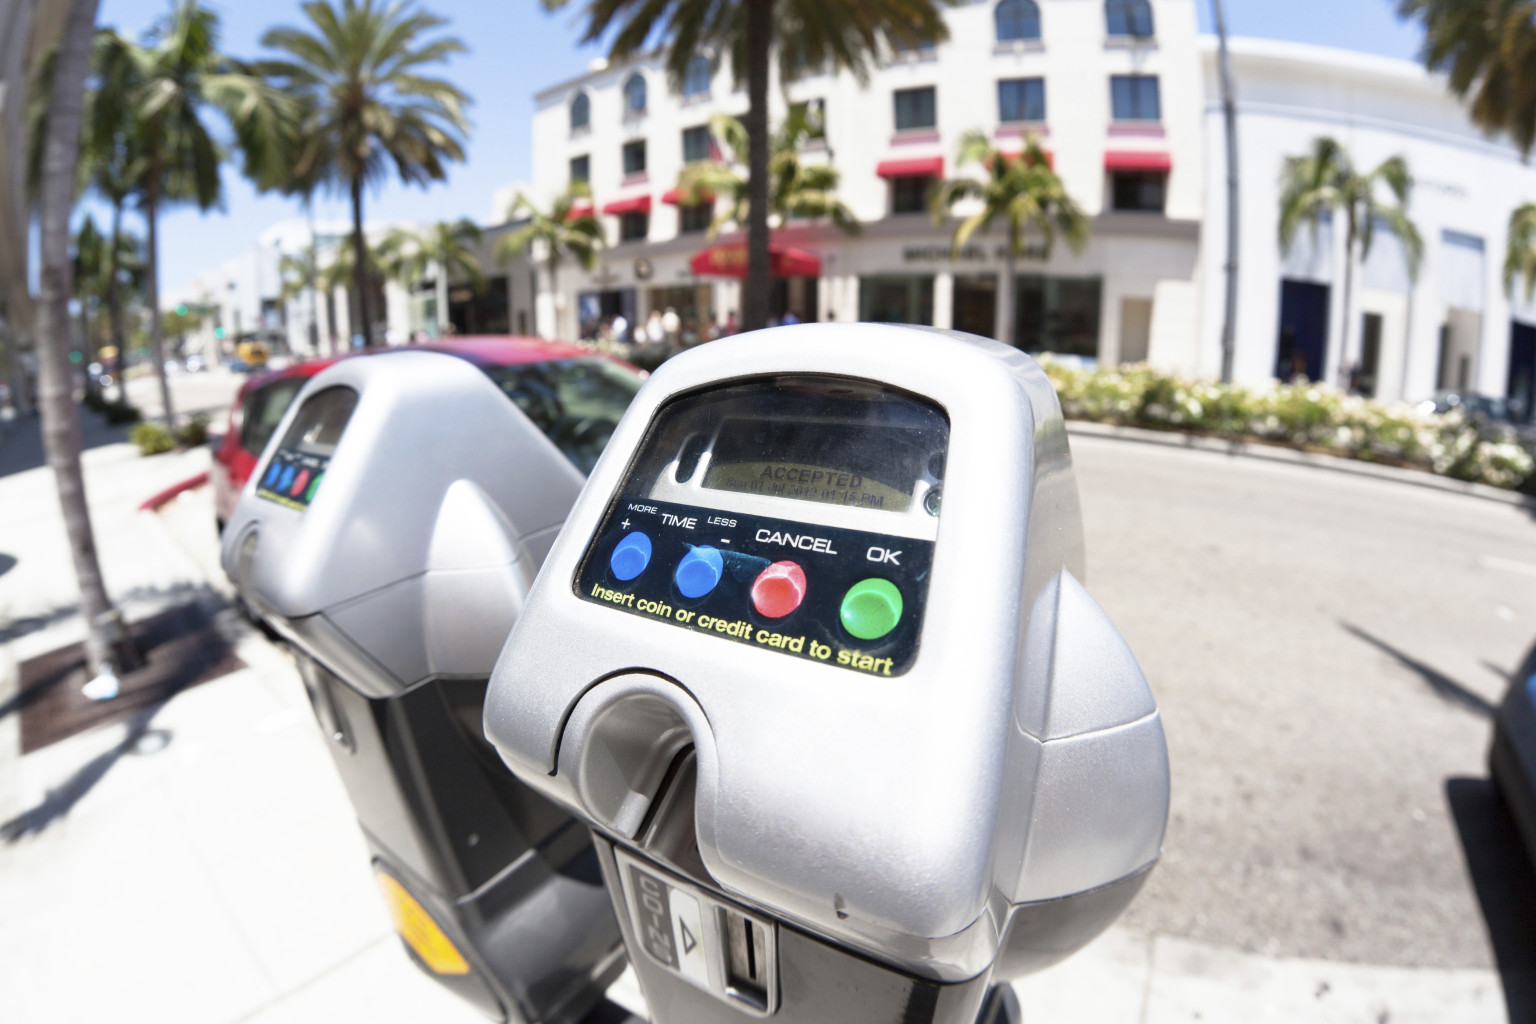 28 Top Photos Parking Meter App Los Angeles - Pay Your Parking Citation Ladot